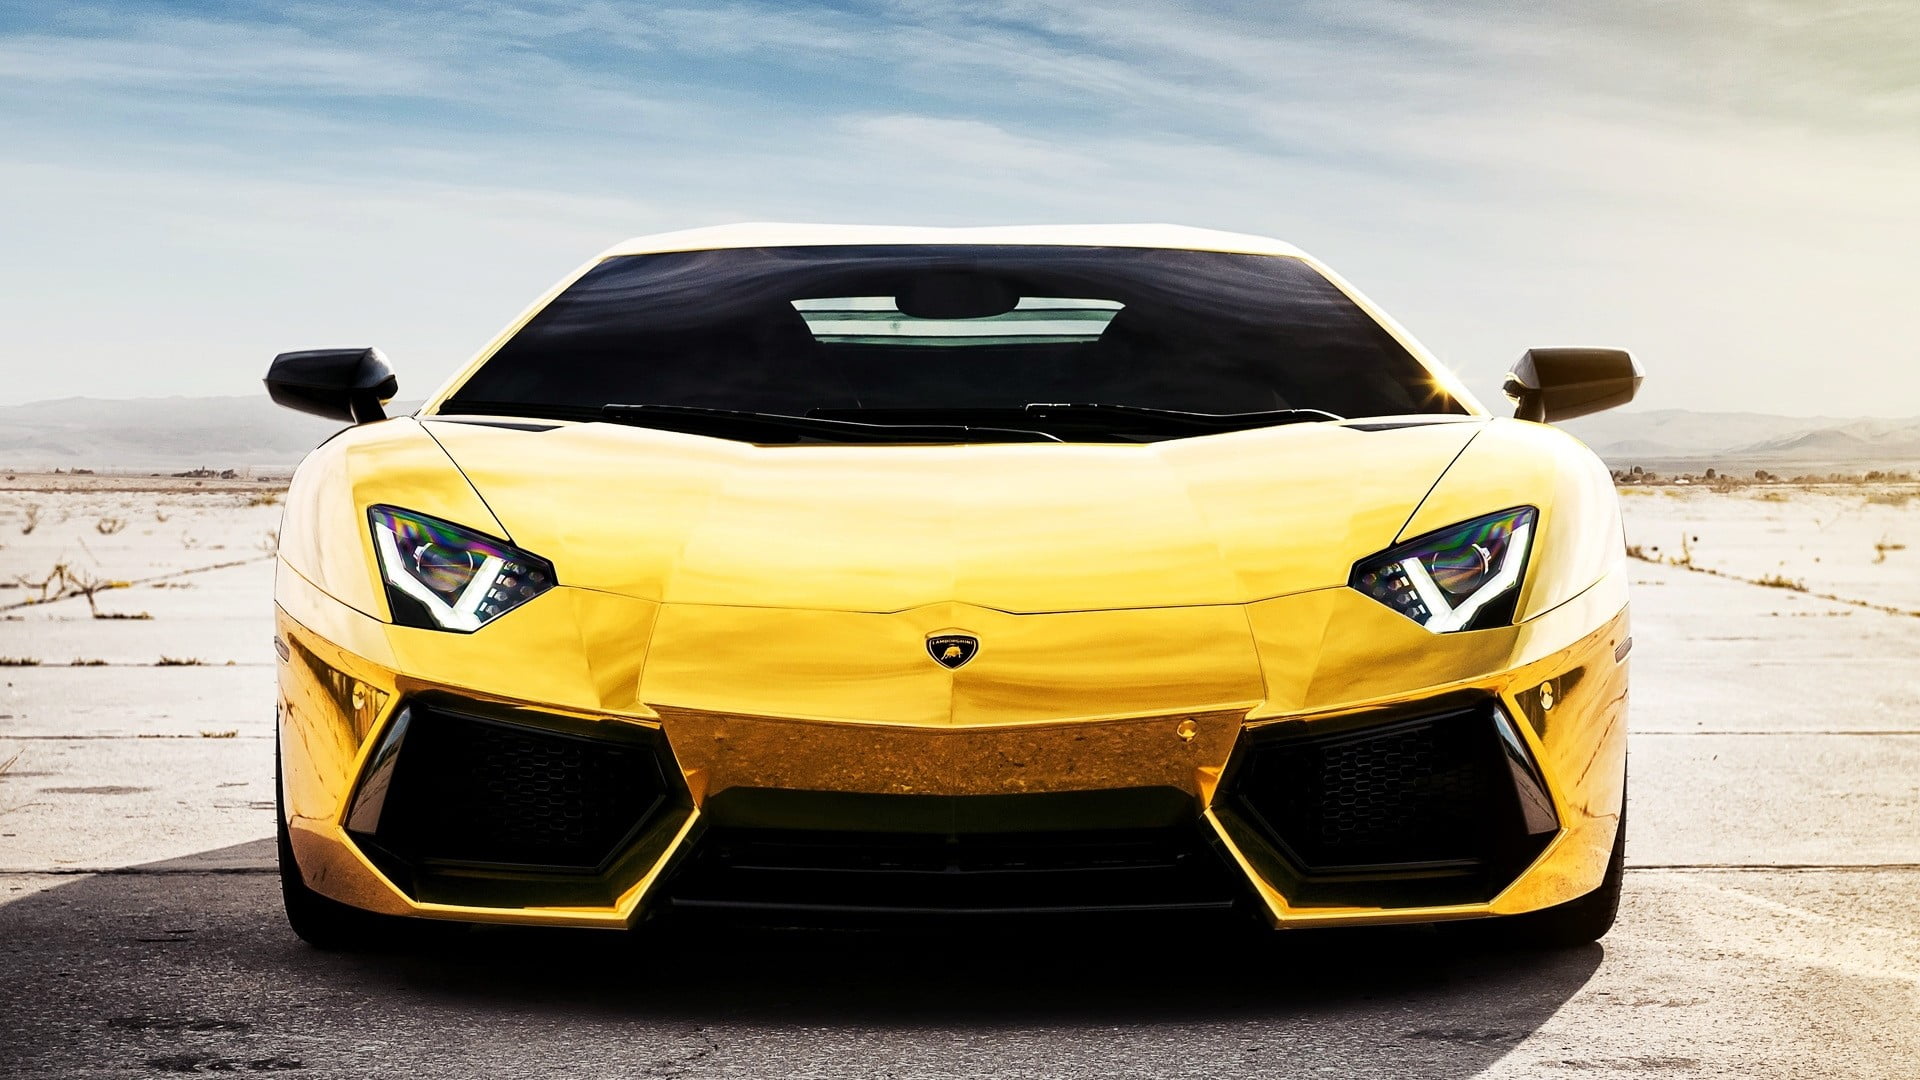 yellow Lamborghini Aventador